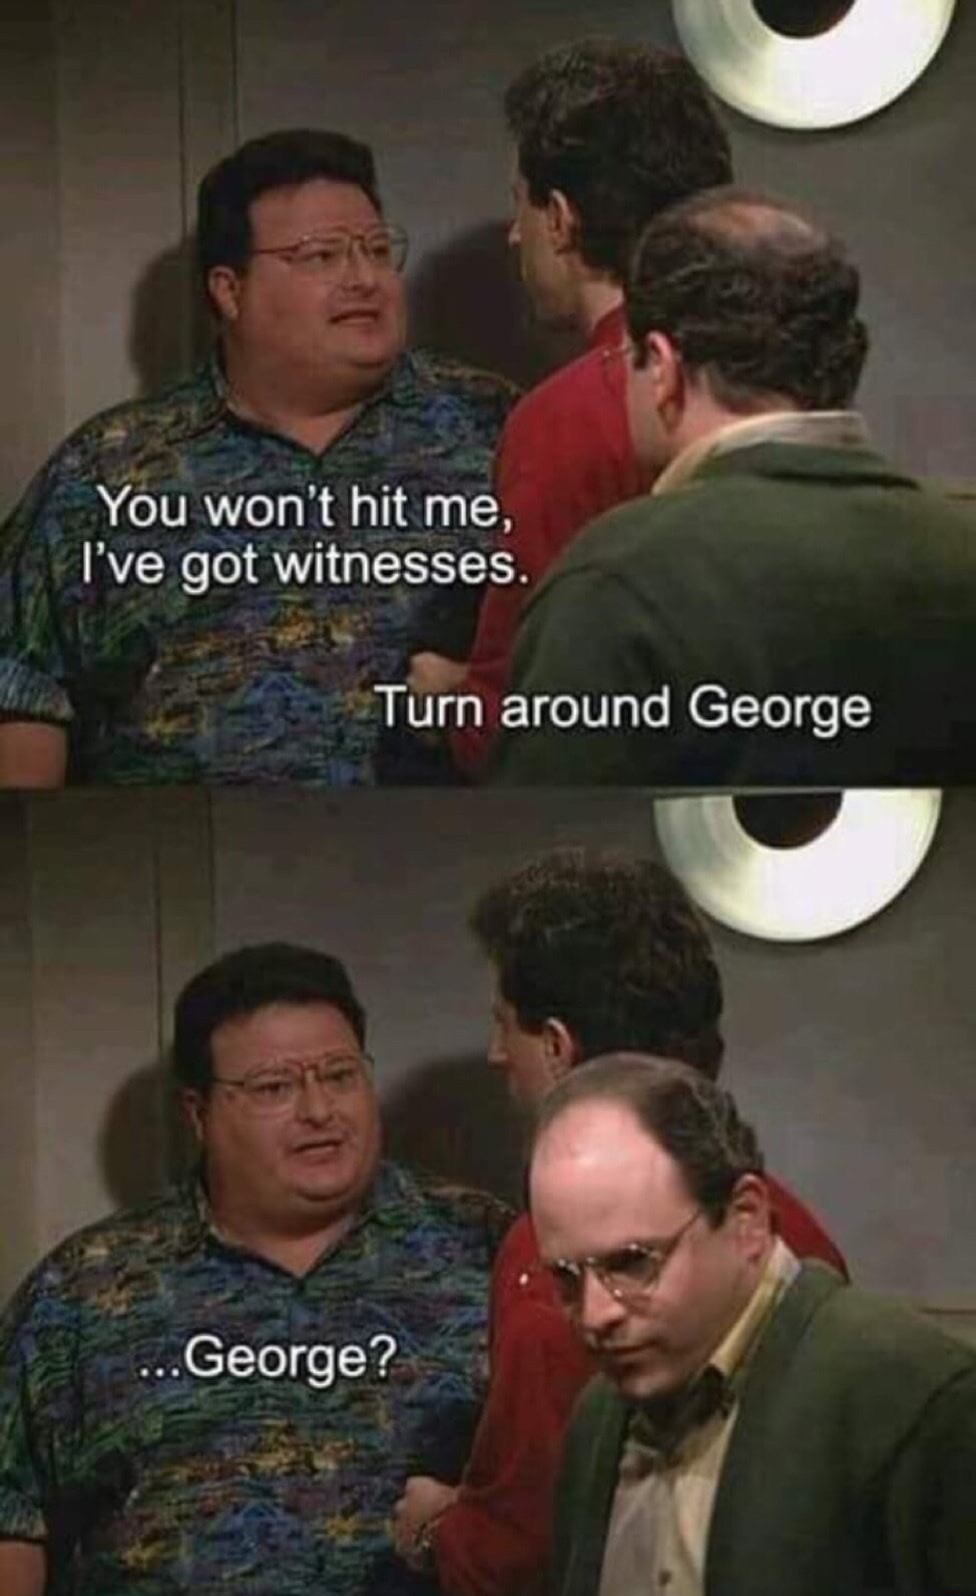 turn around george - You won't hit me, I've got witnesses. Turn around George ... George?